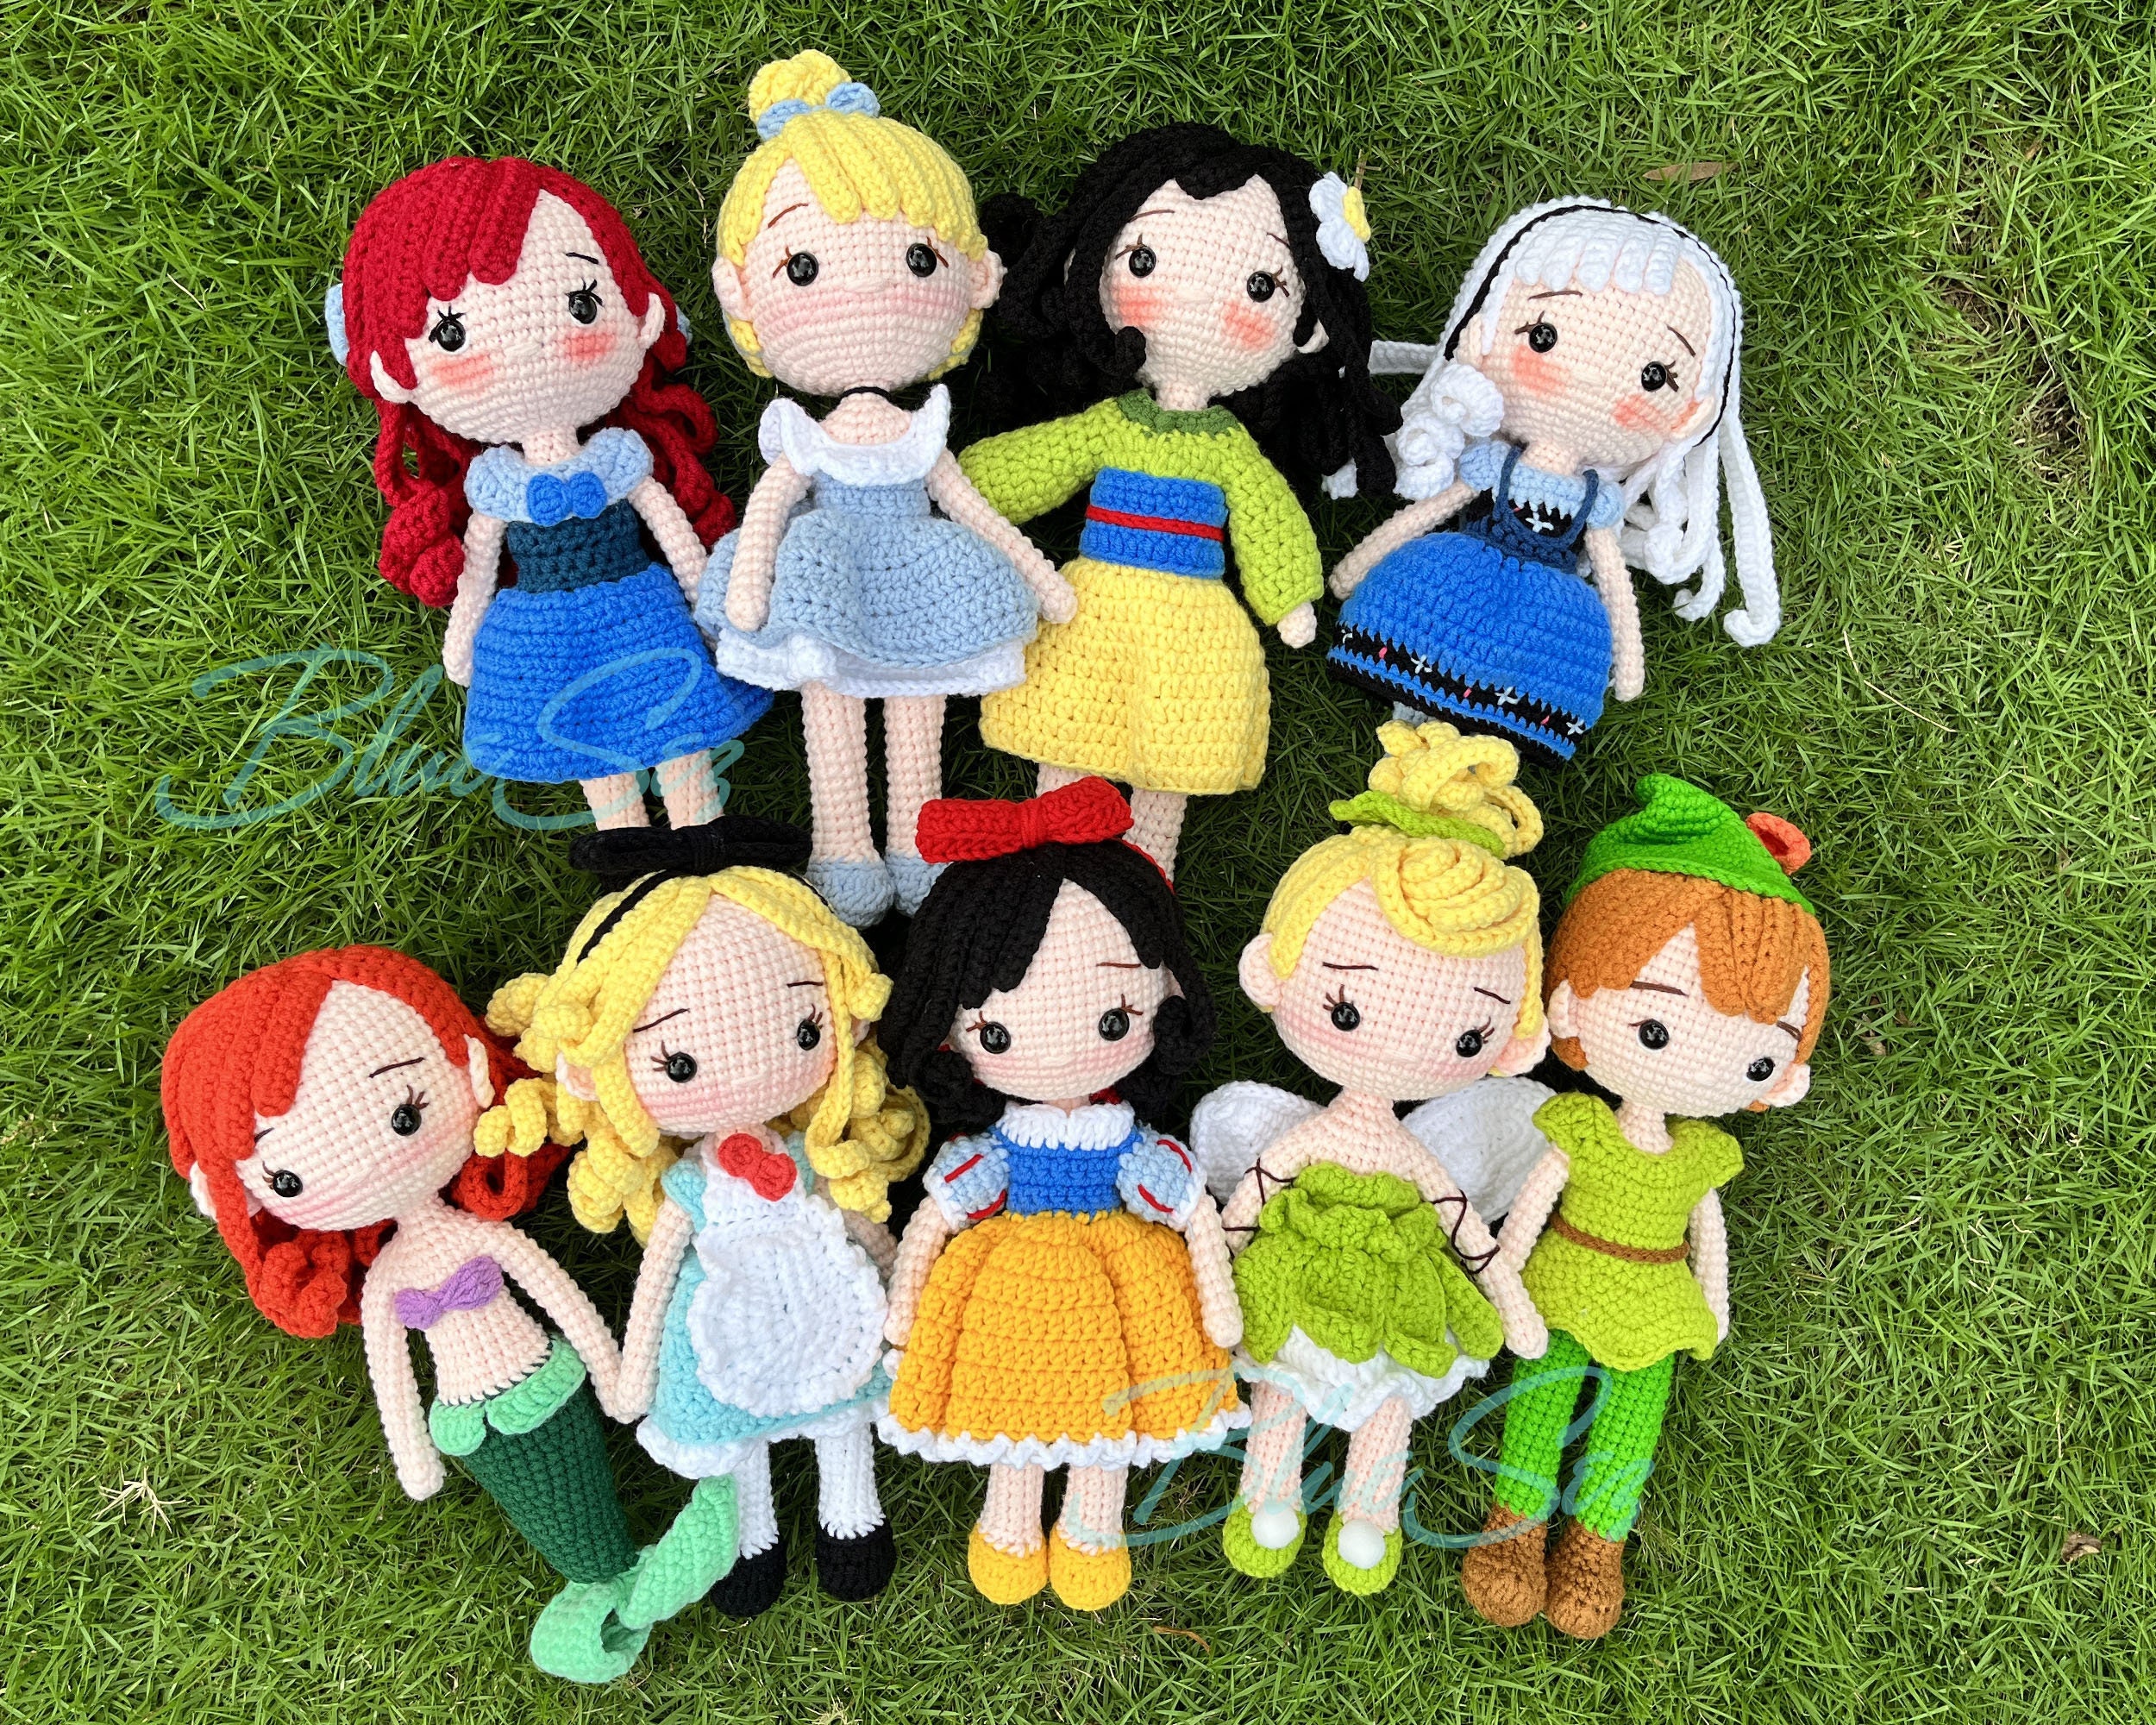 4 Disney Princess Plush Dolls 14 - 16 Elsa Anna Jasmine & Rapunzel